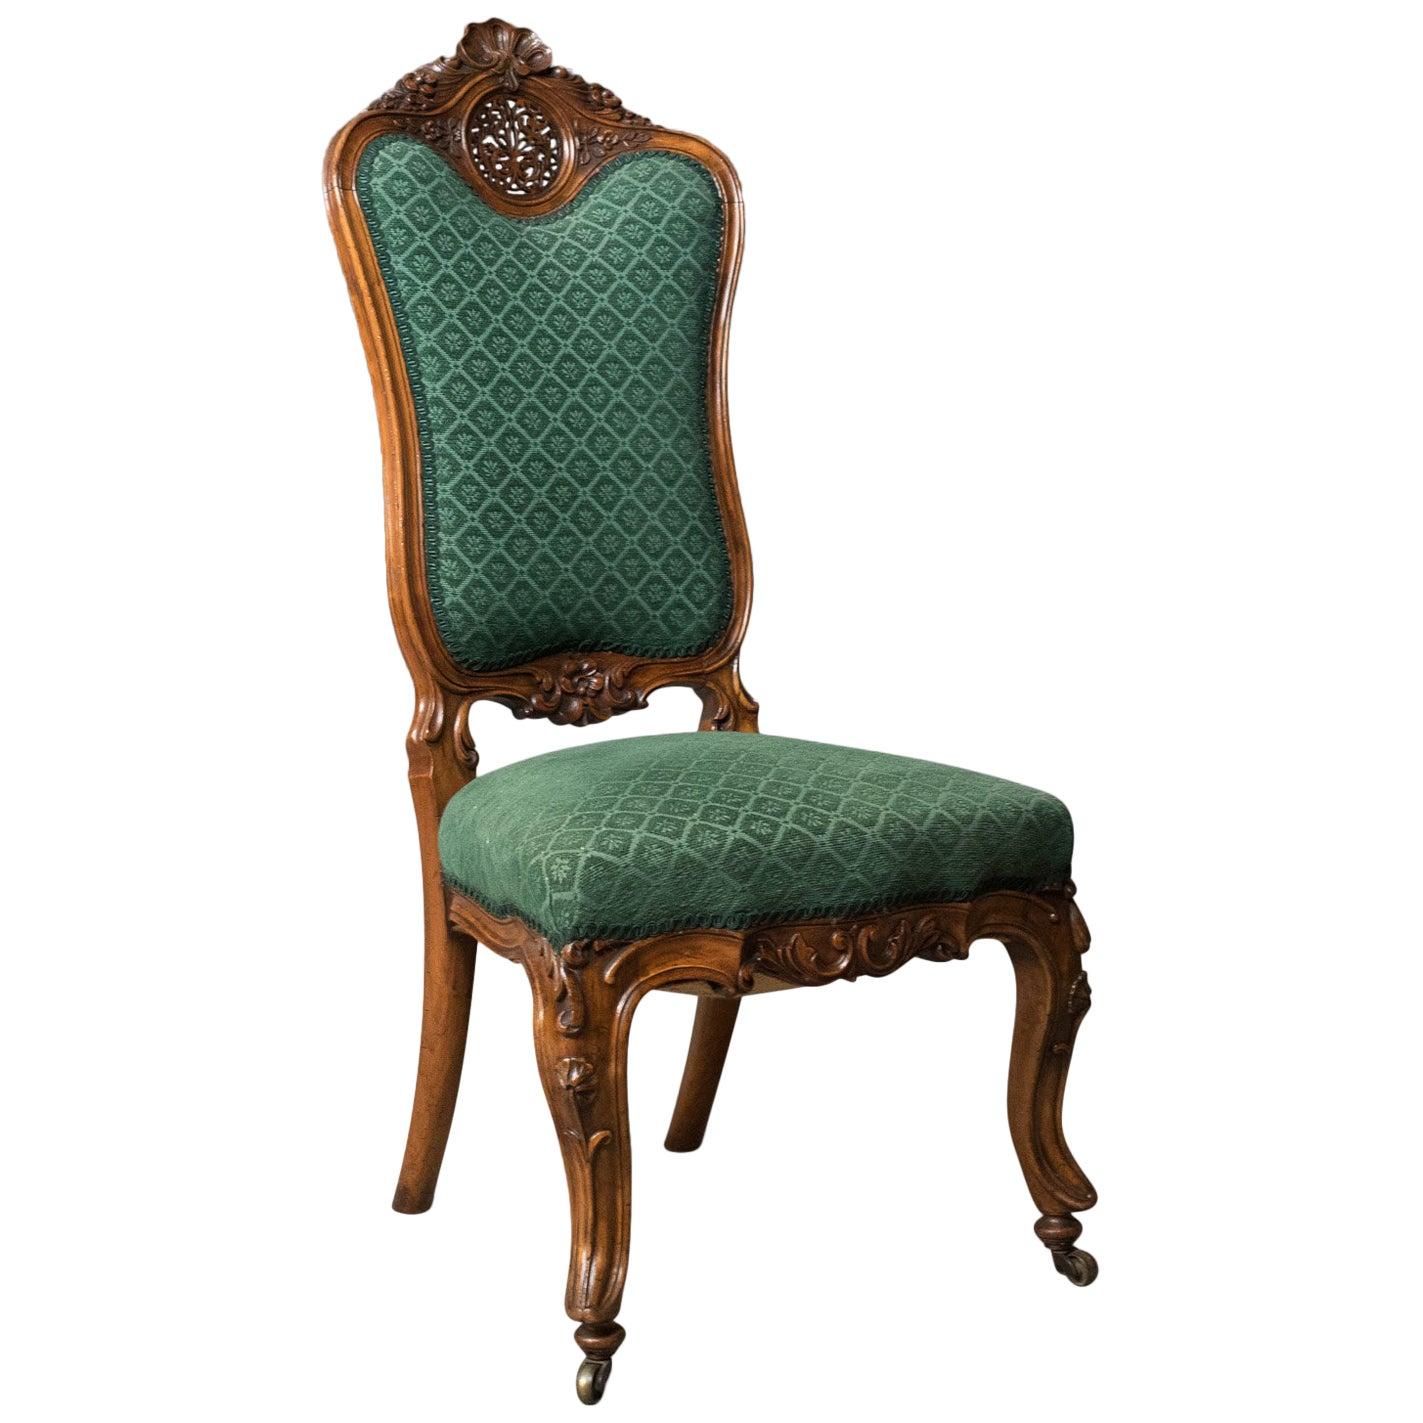 Antique Side Chair, 19th Century, Nursing, Salon, English, Walnut, circa 1820